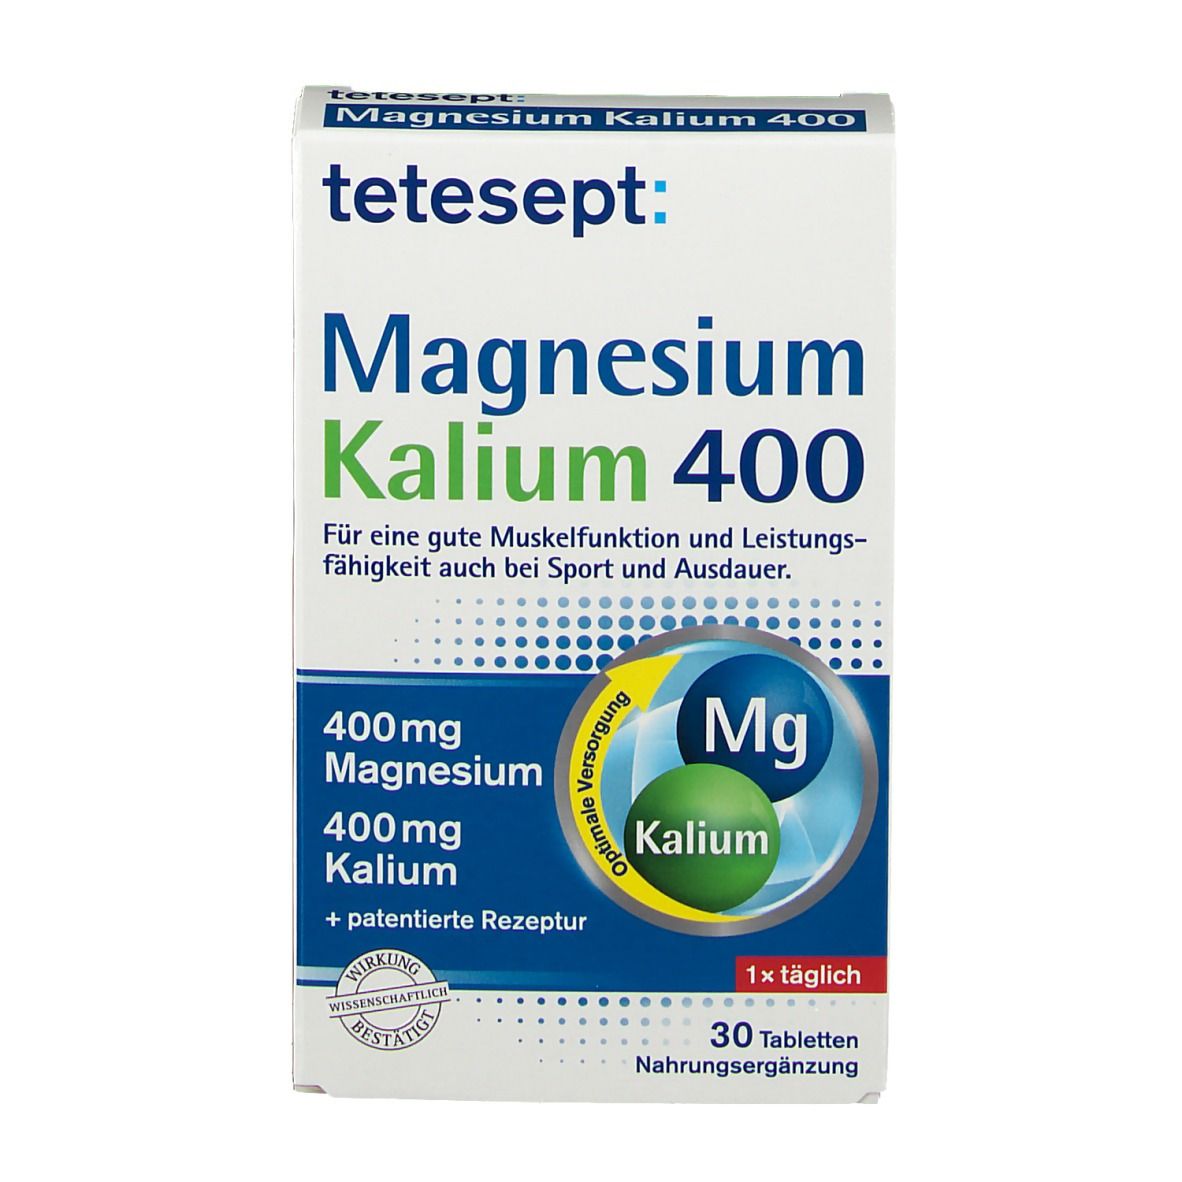 tetesept® Magnesium Kalium 400